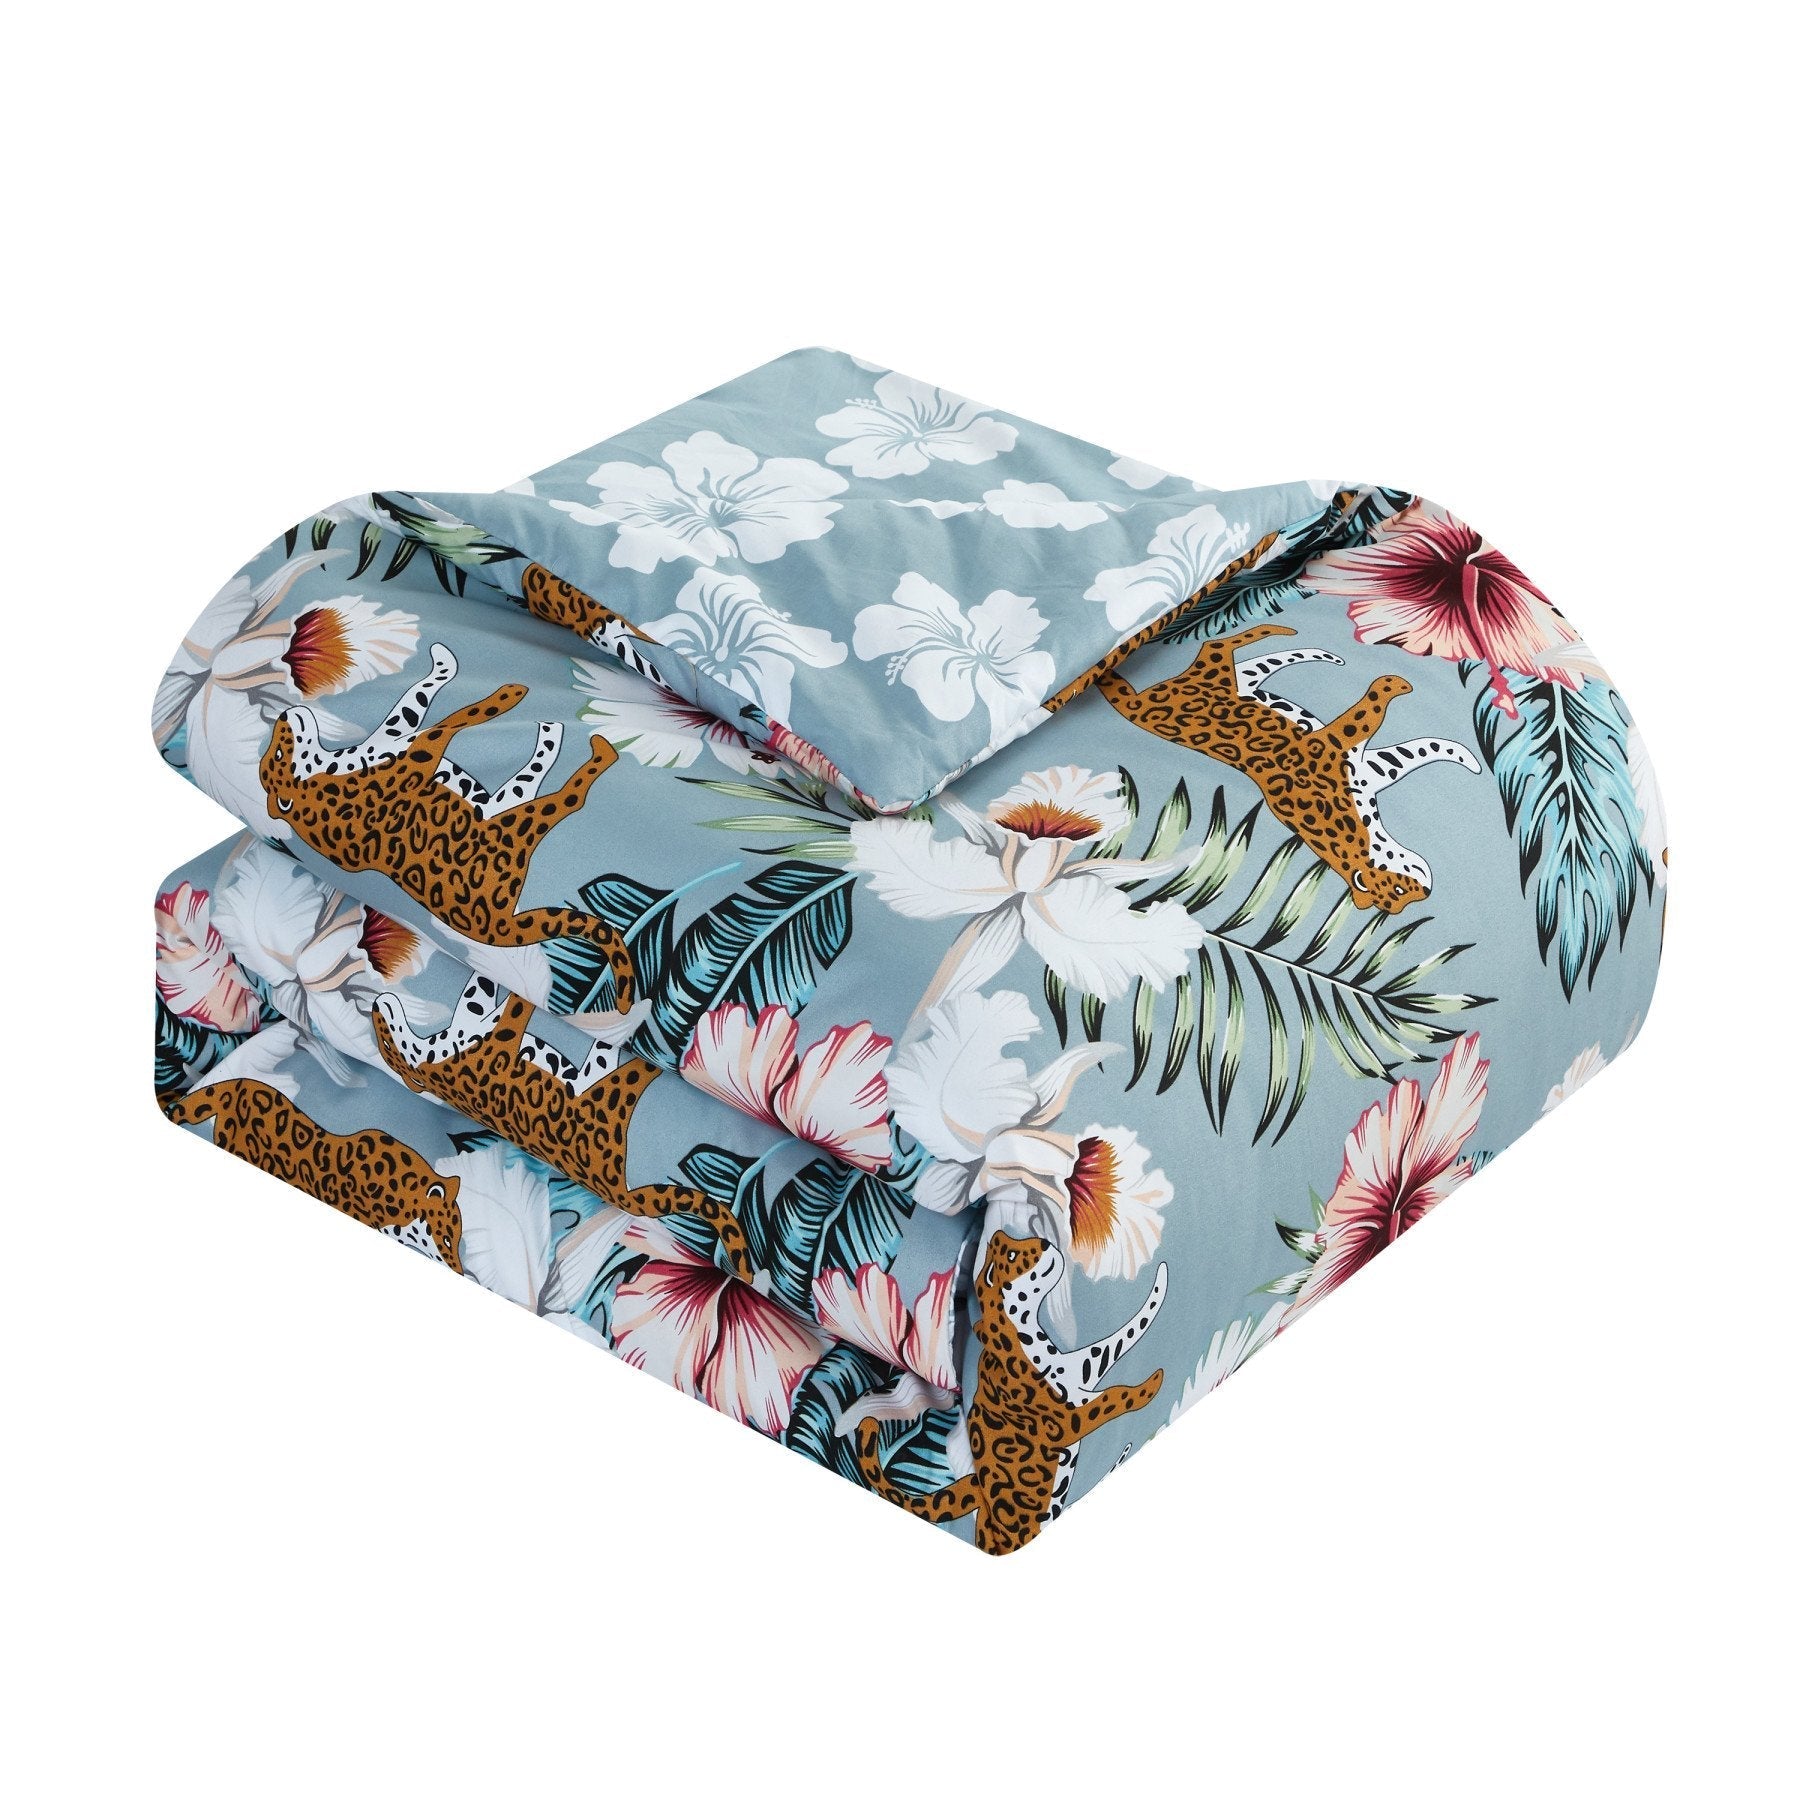 Myrina 5 Piece Floral Comforter Set